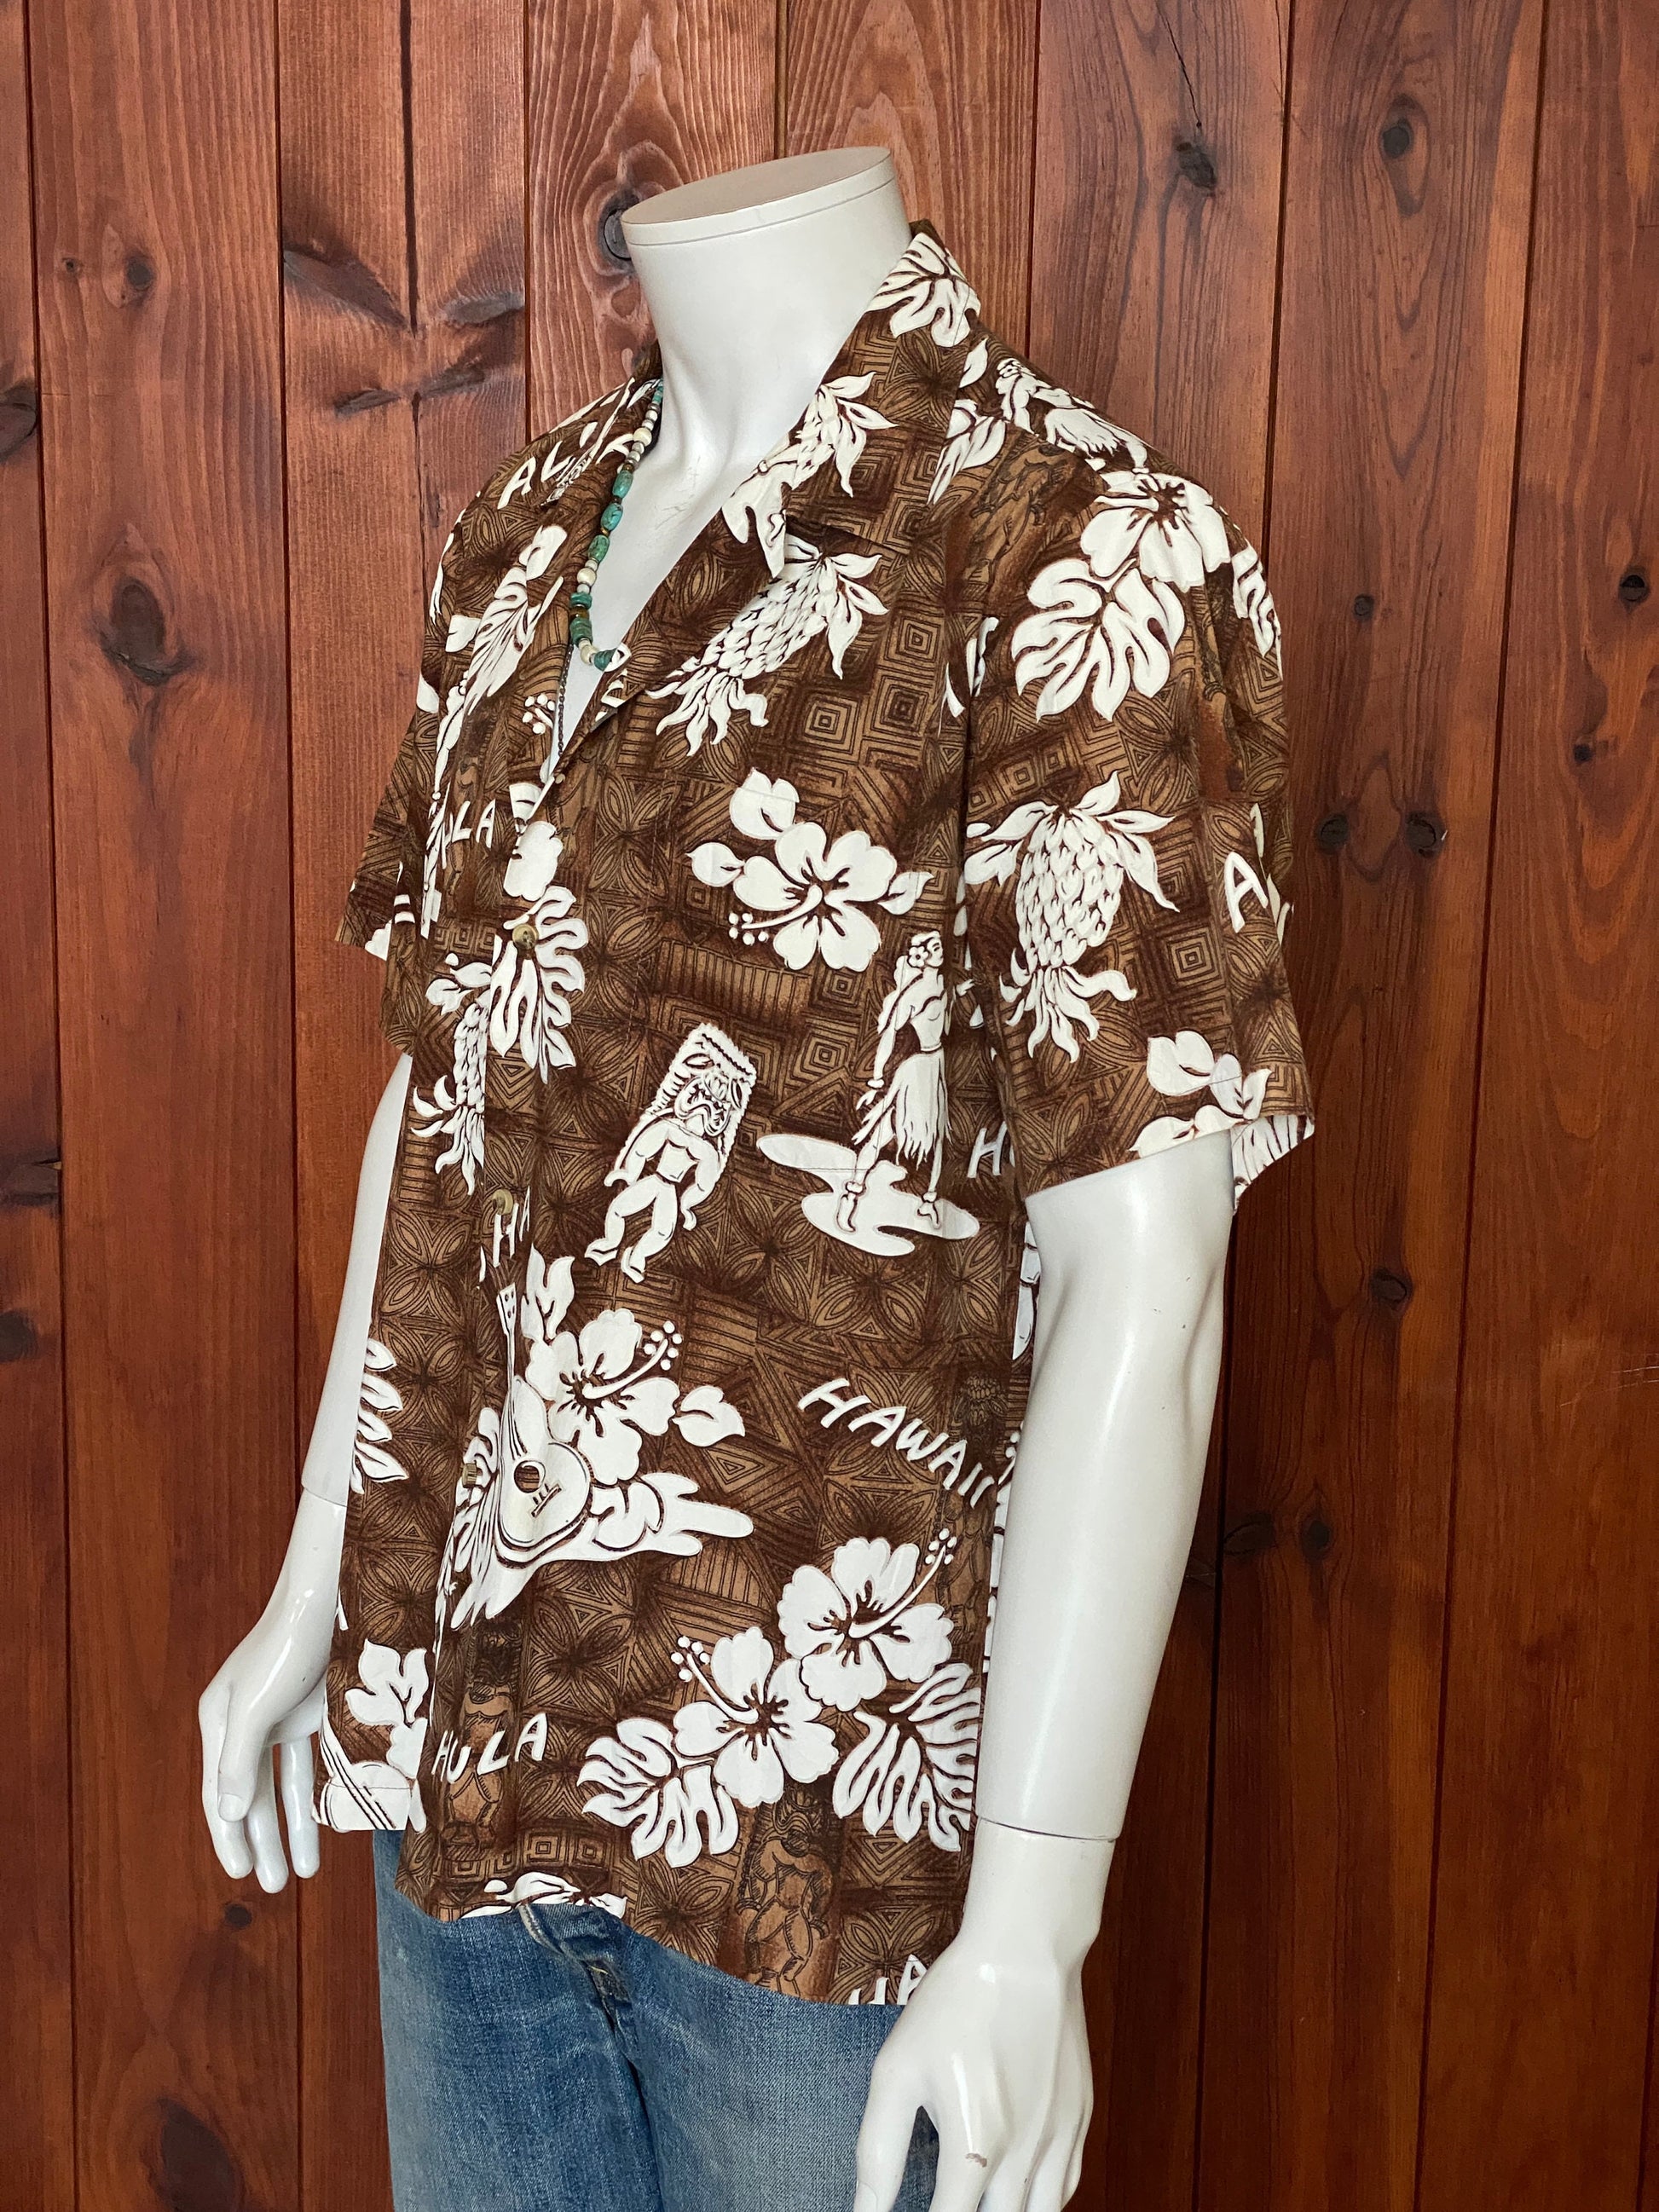 Large vintage 80s Hawaiian cotton shirt made in Hawaii - retro island fashion.